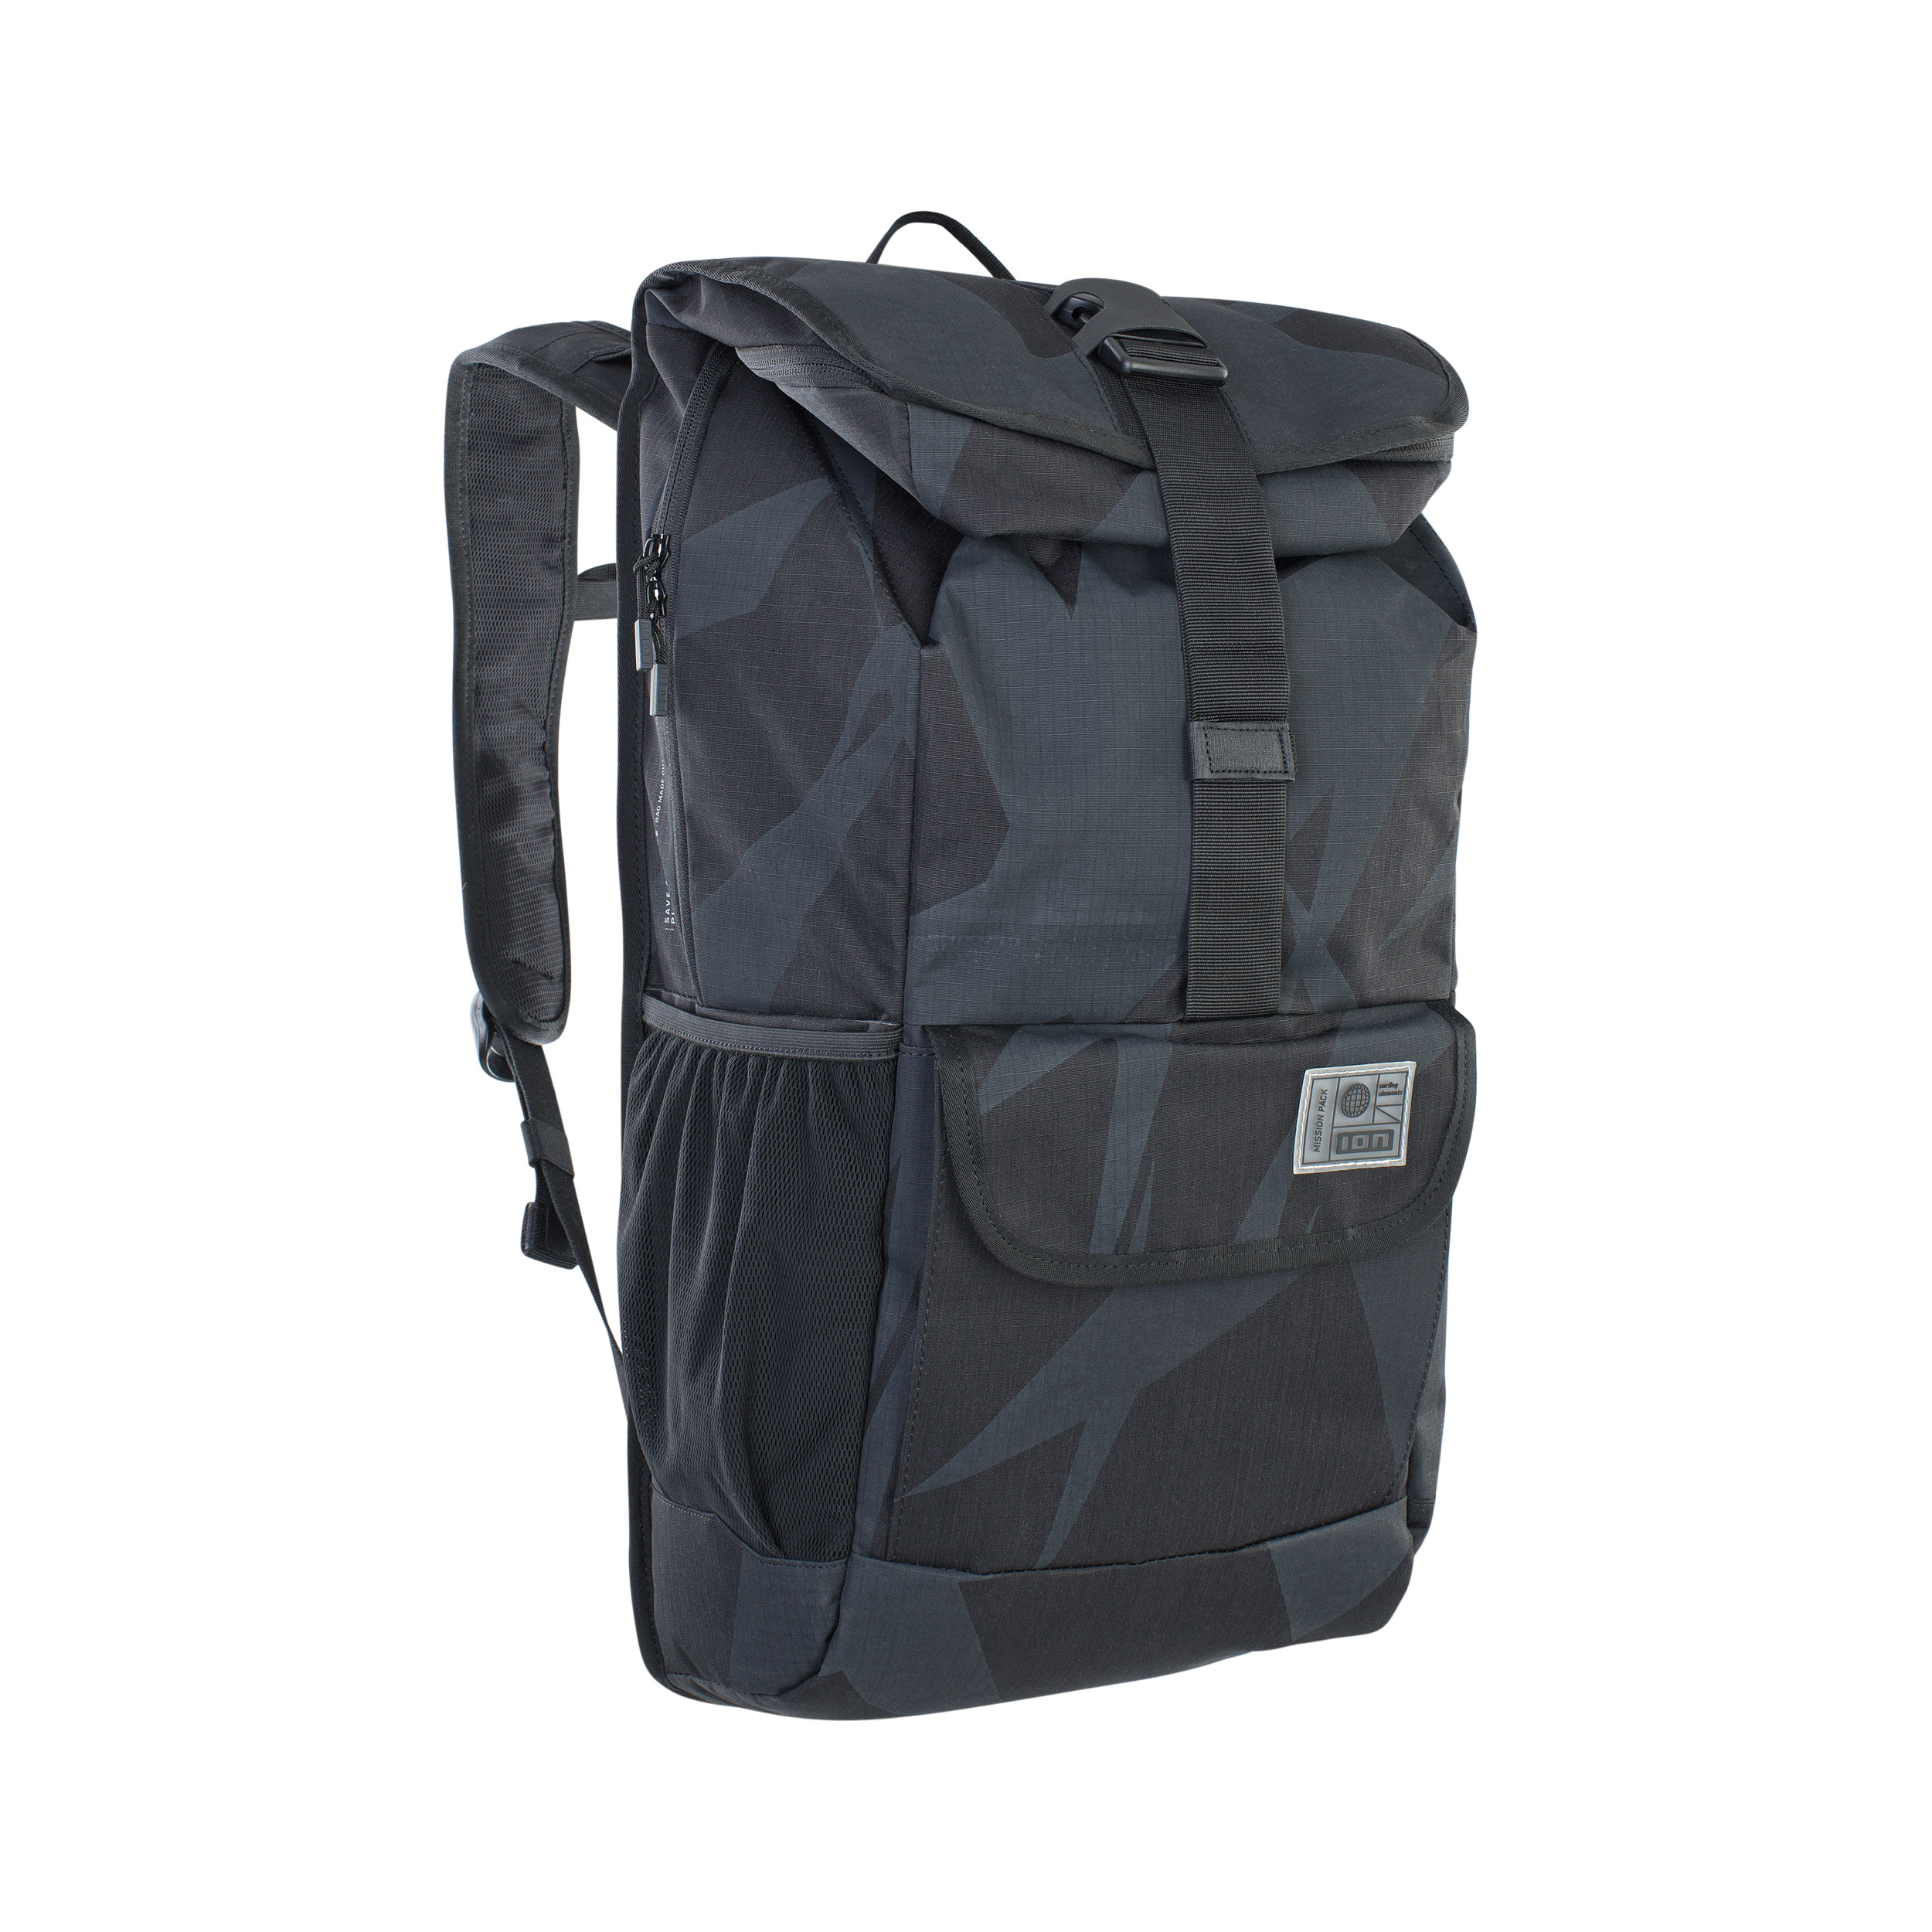 Plecak ION - Mission Pack - black - 40l -48220-7001